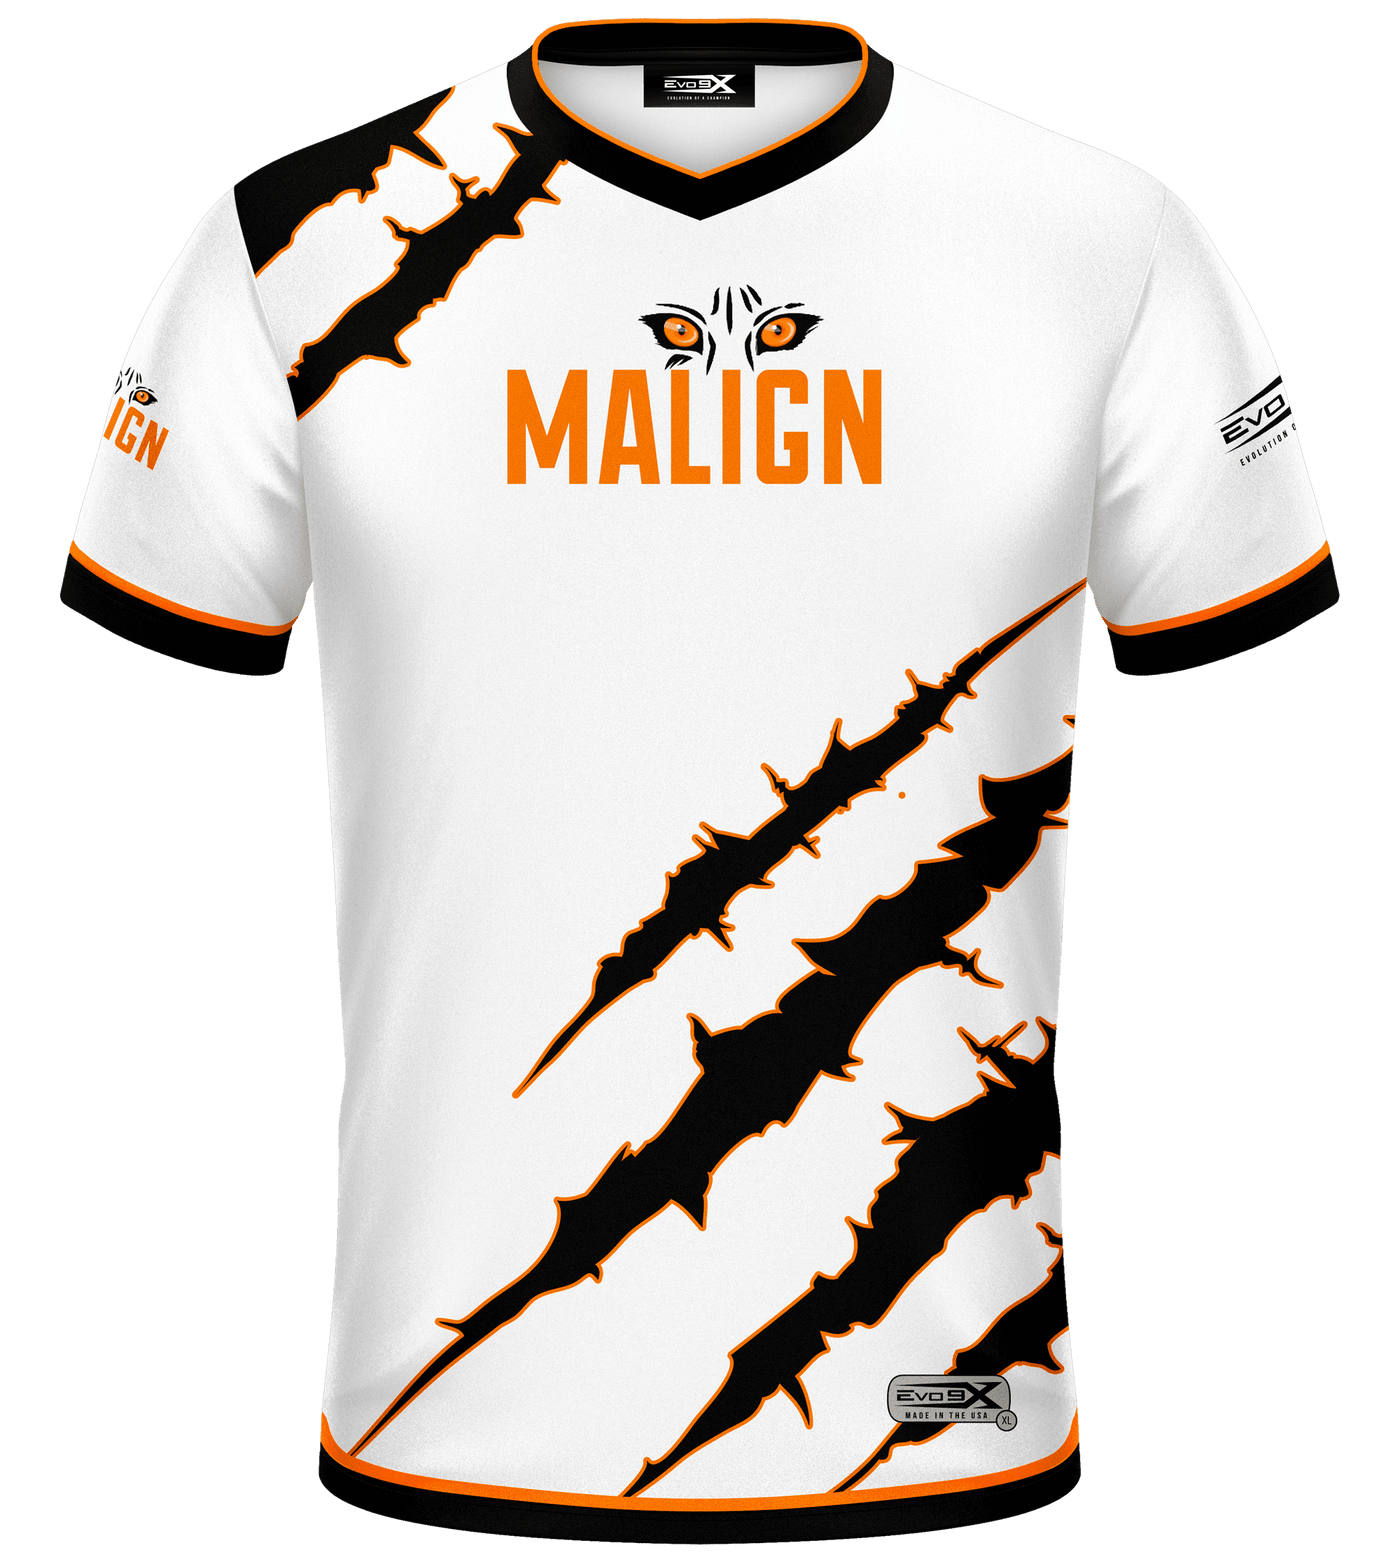 Malign Premium Esports Jersey